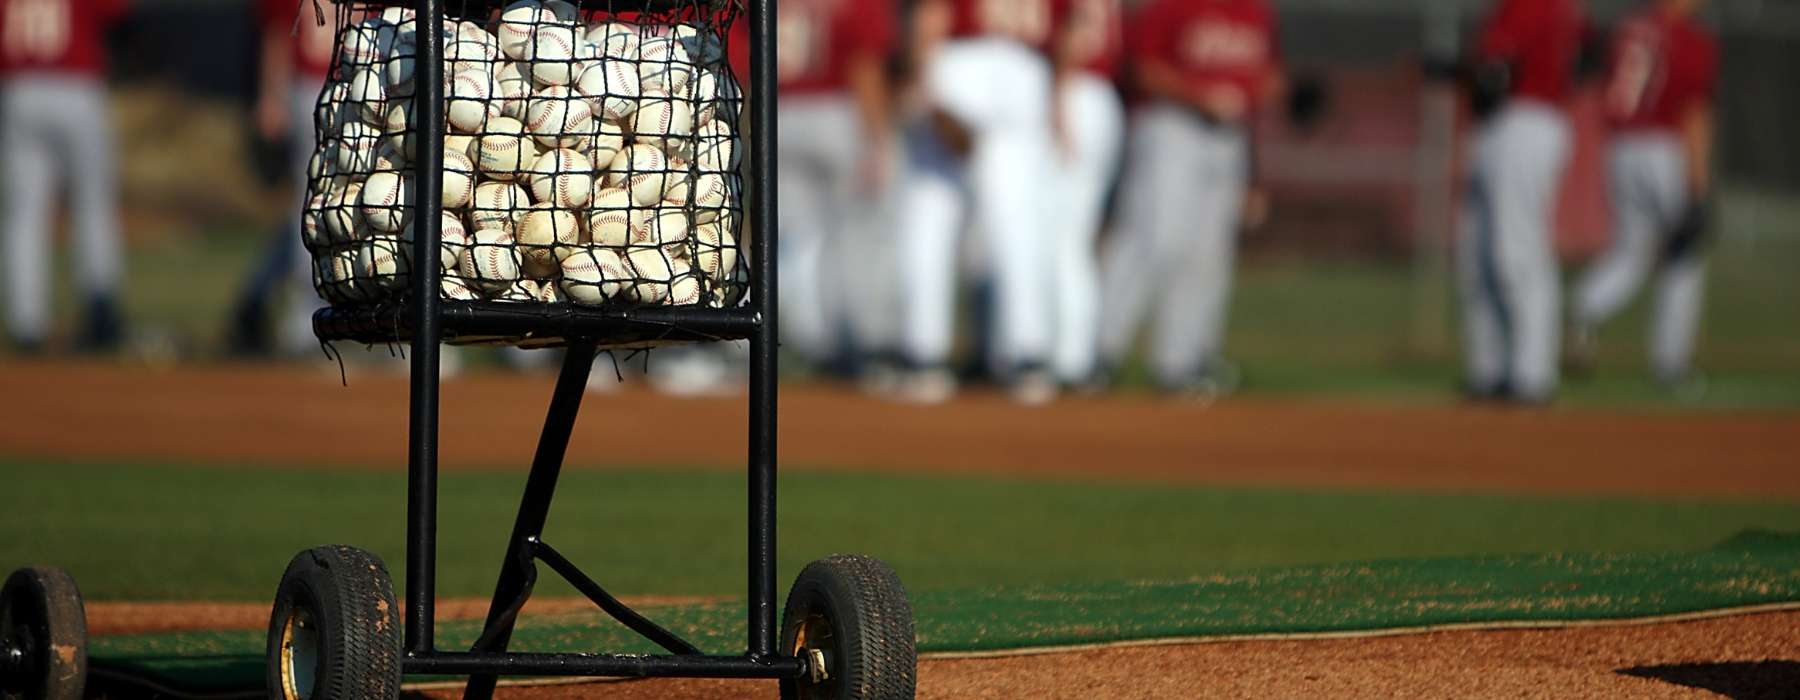 baseball & fastpitch softball practice equipment